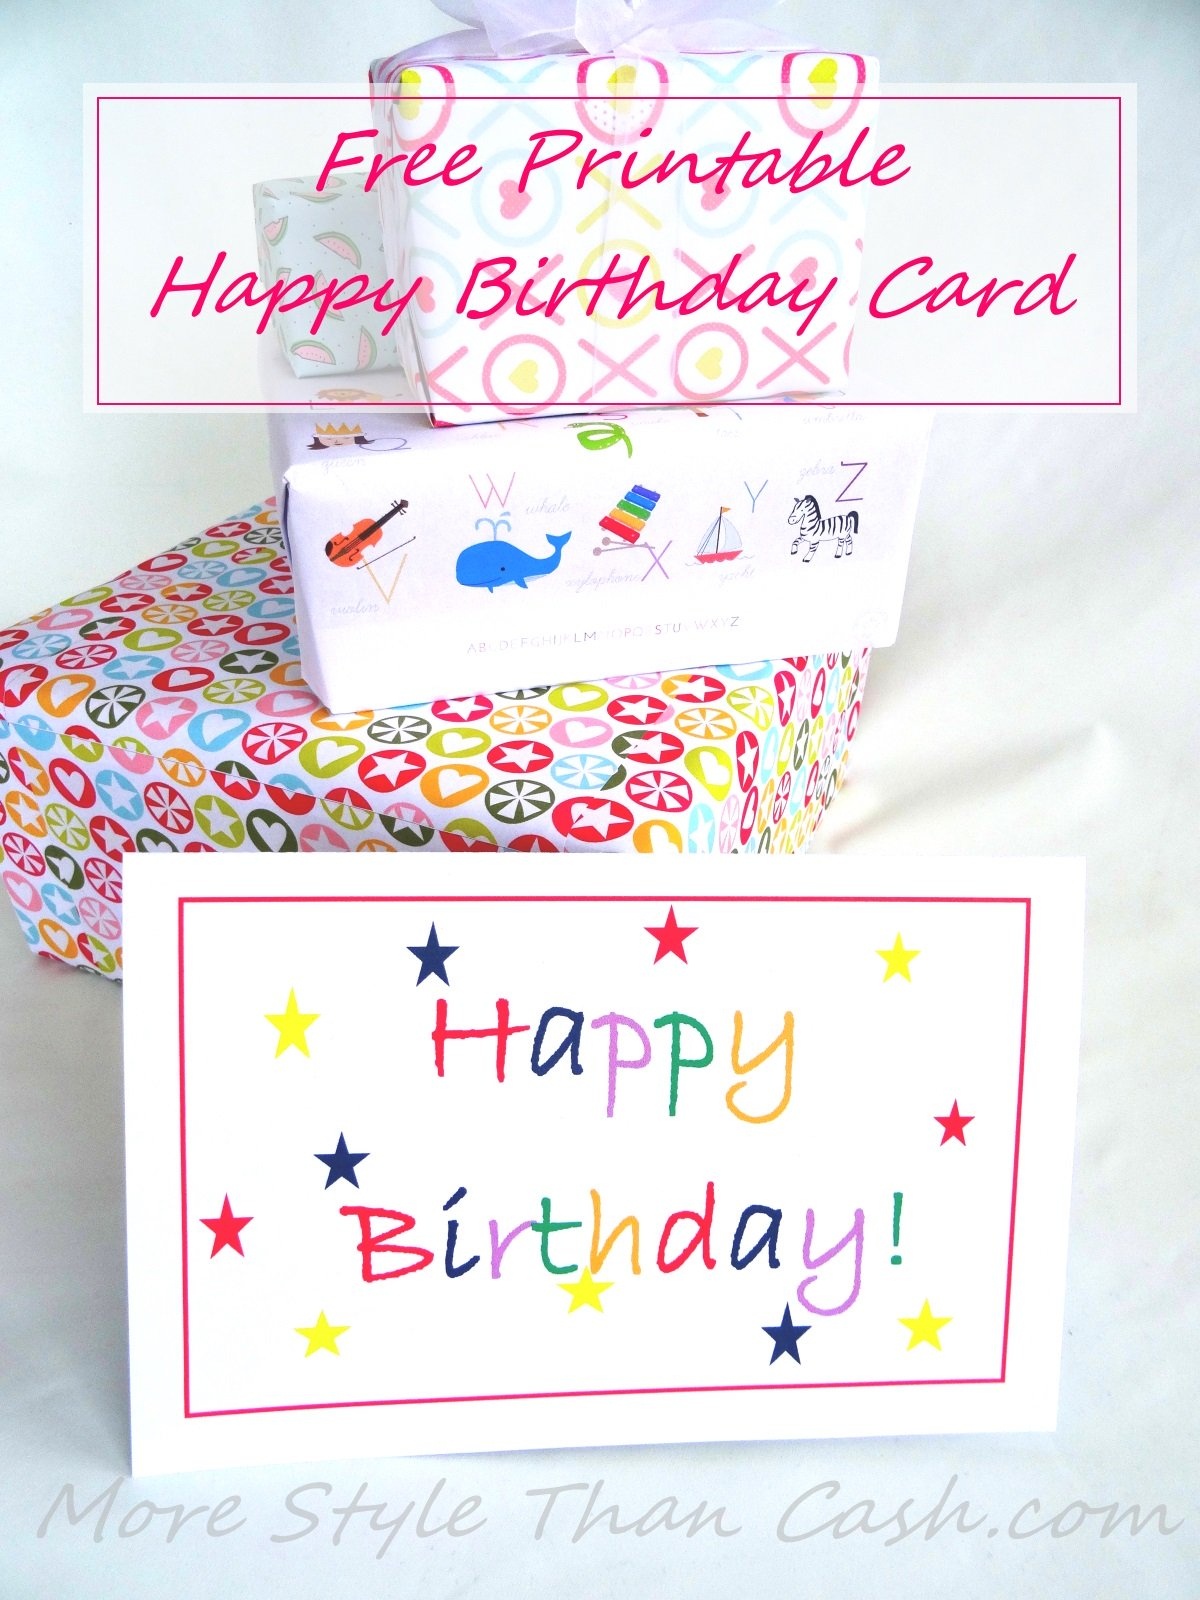 Free Printable Birthday Card - Free Printable Birthday Cards